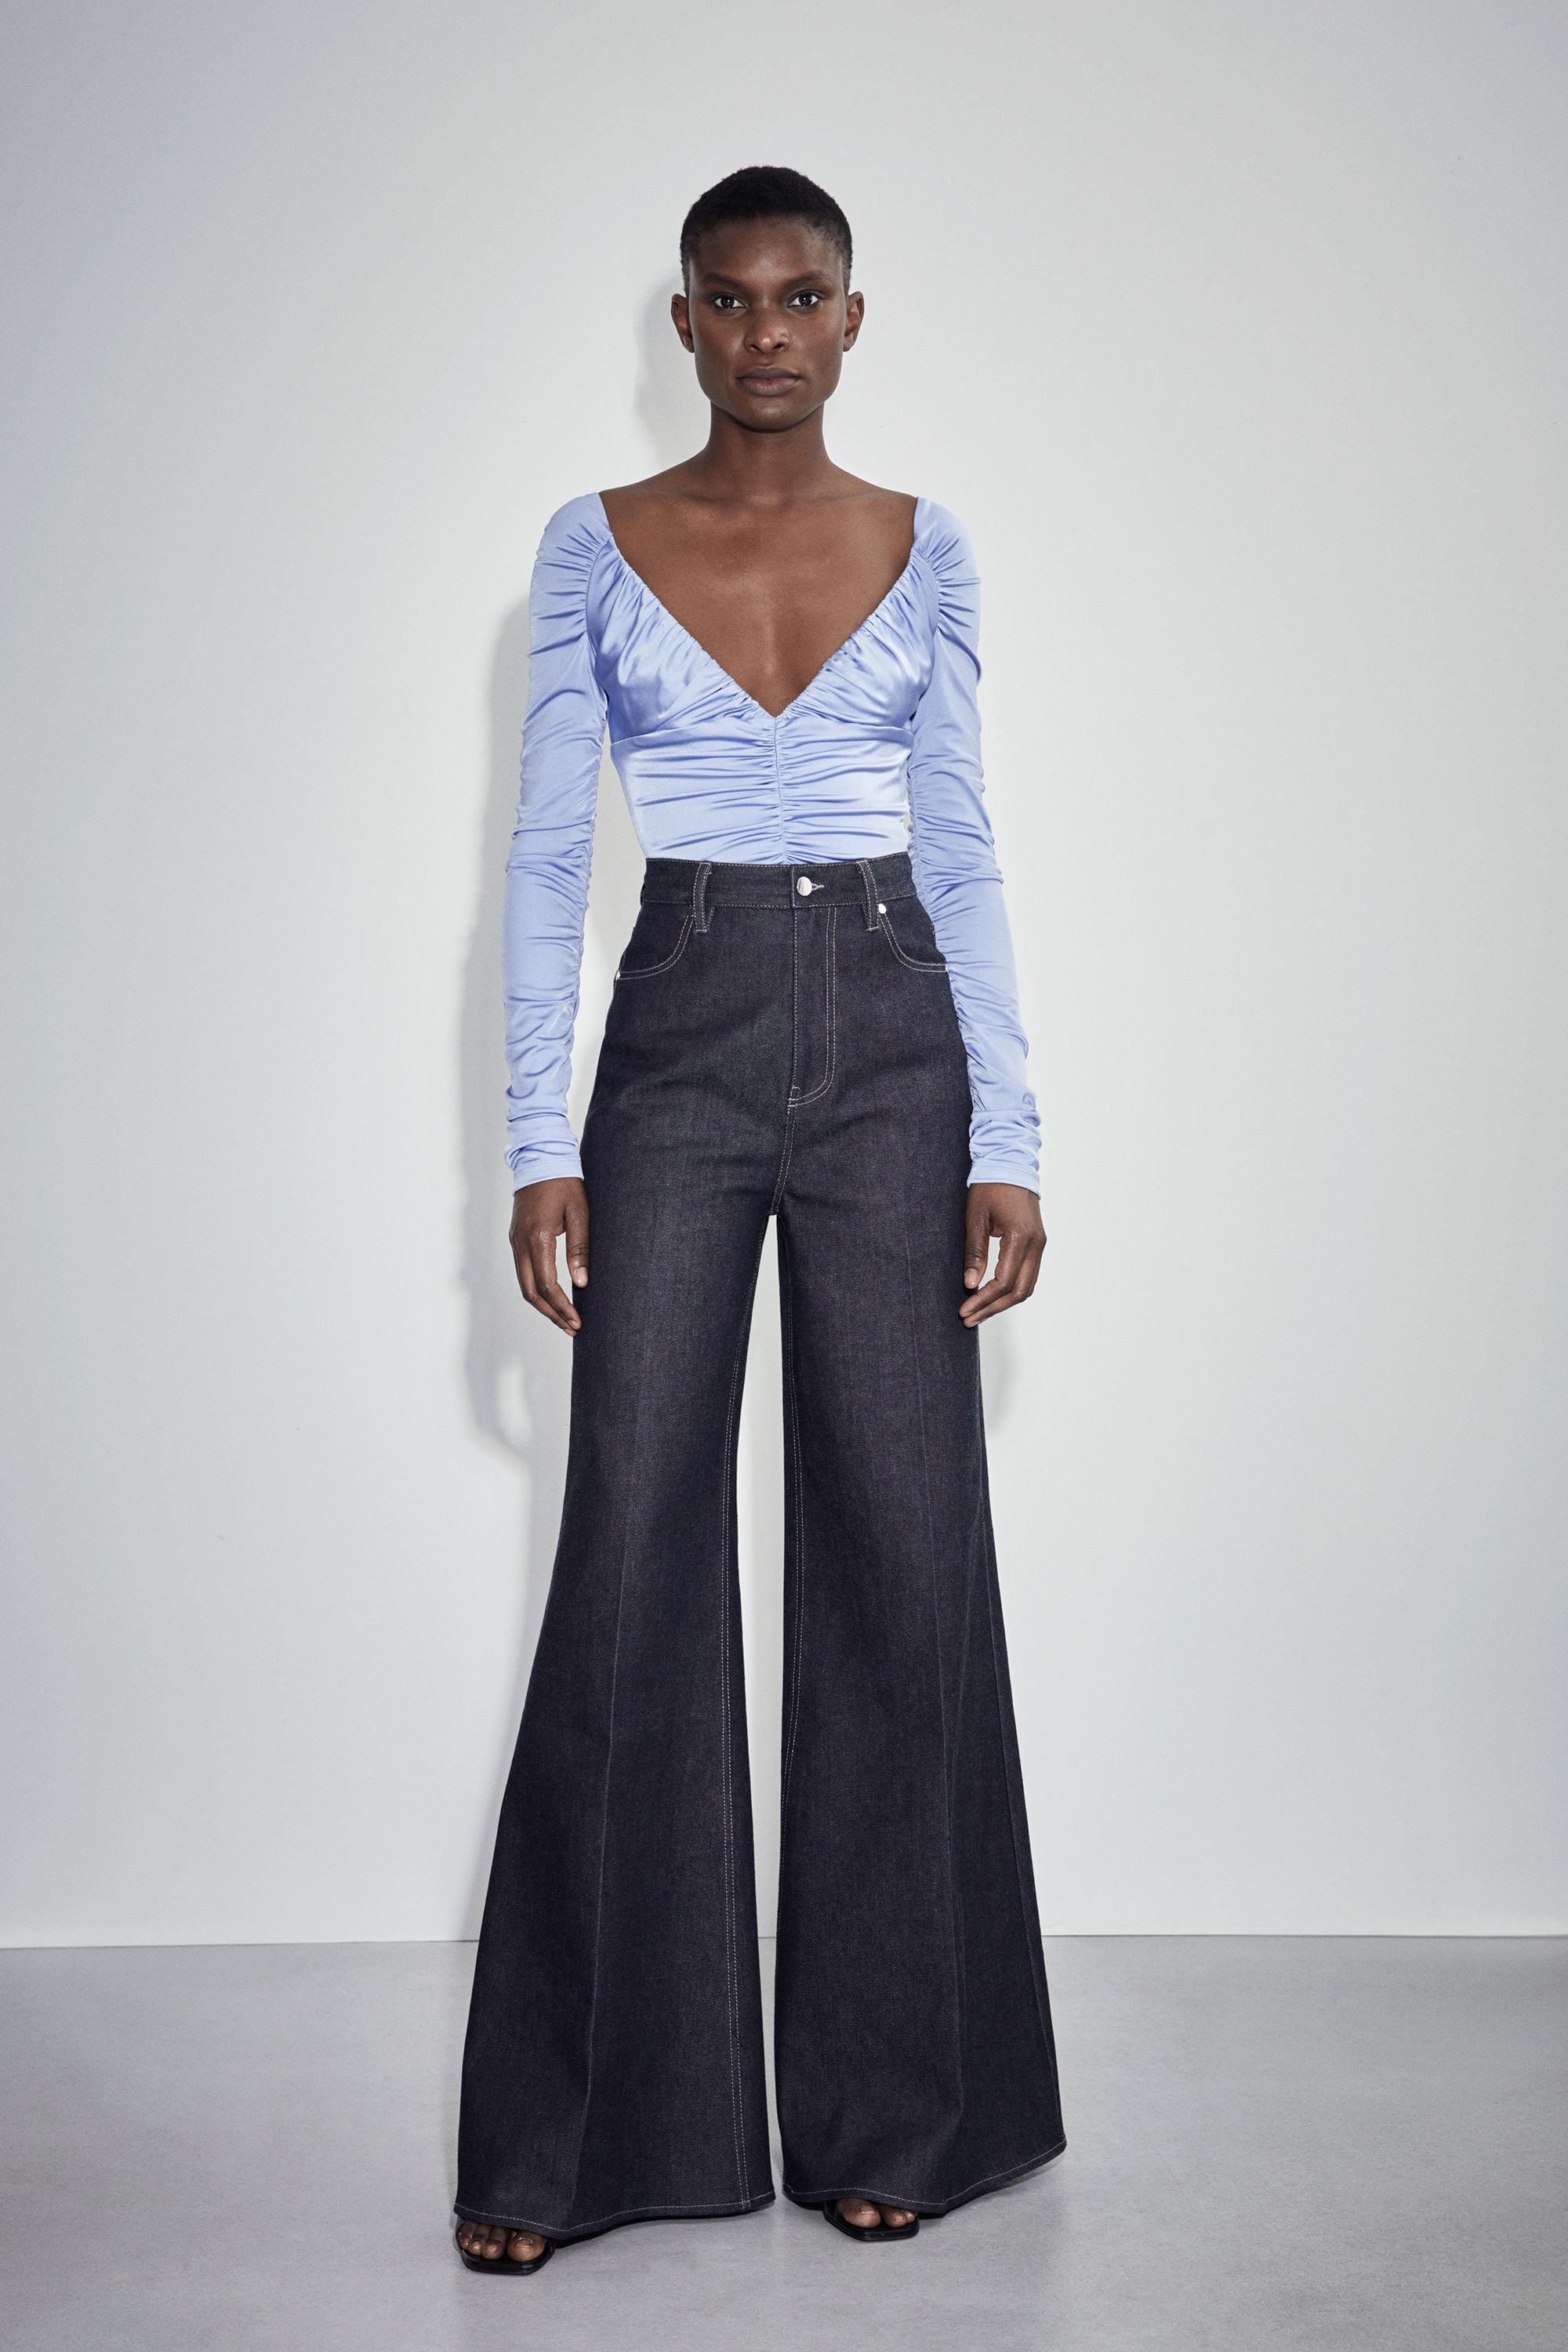 Groot universum jam rommel J Lo Embraces '70s Style in Flared Dark Denim Jeans | POPSUGAR Fashion